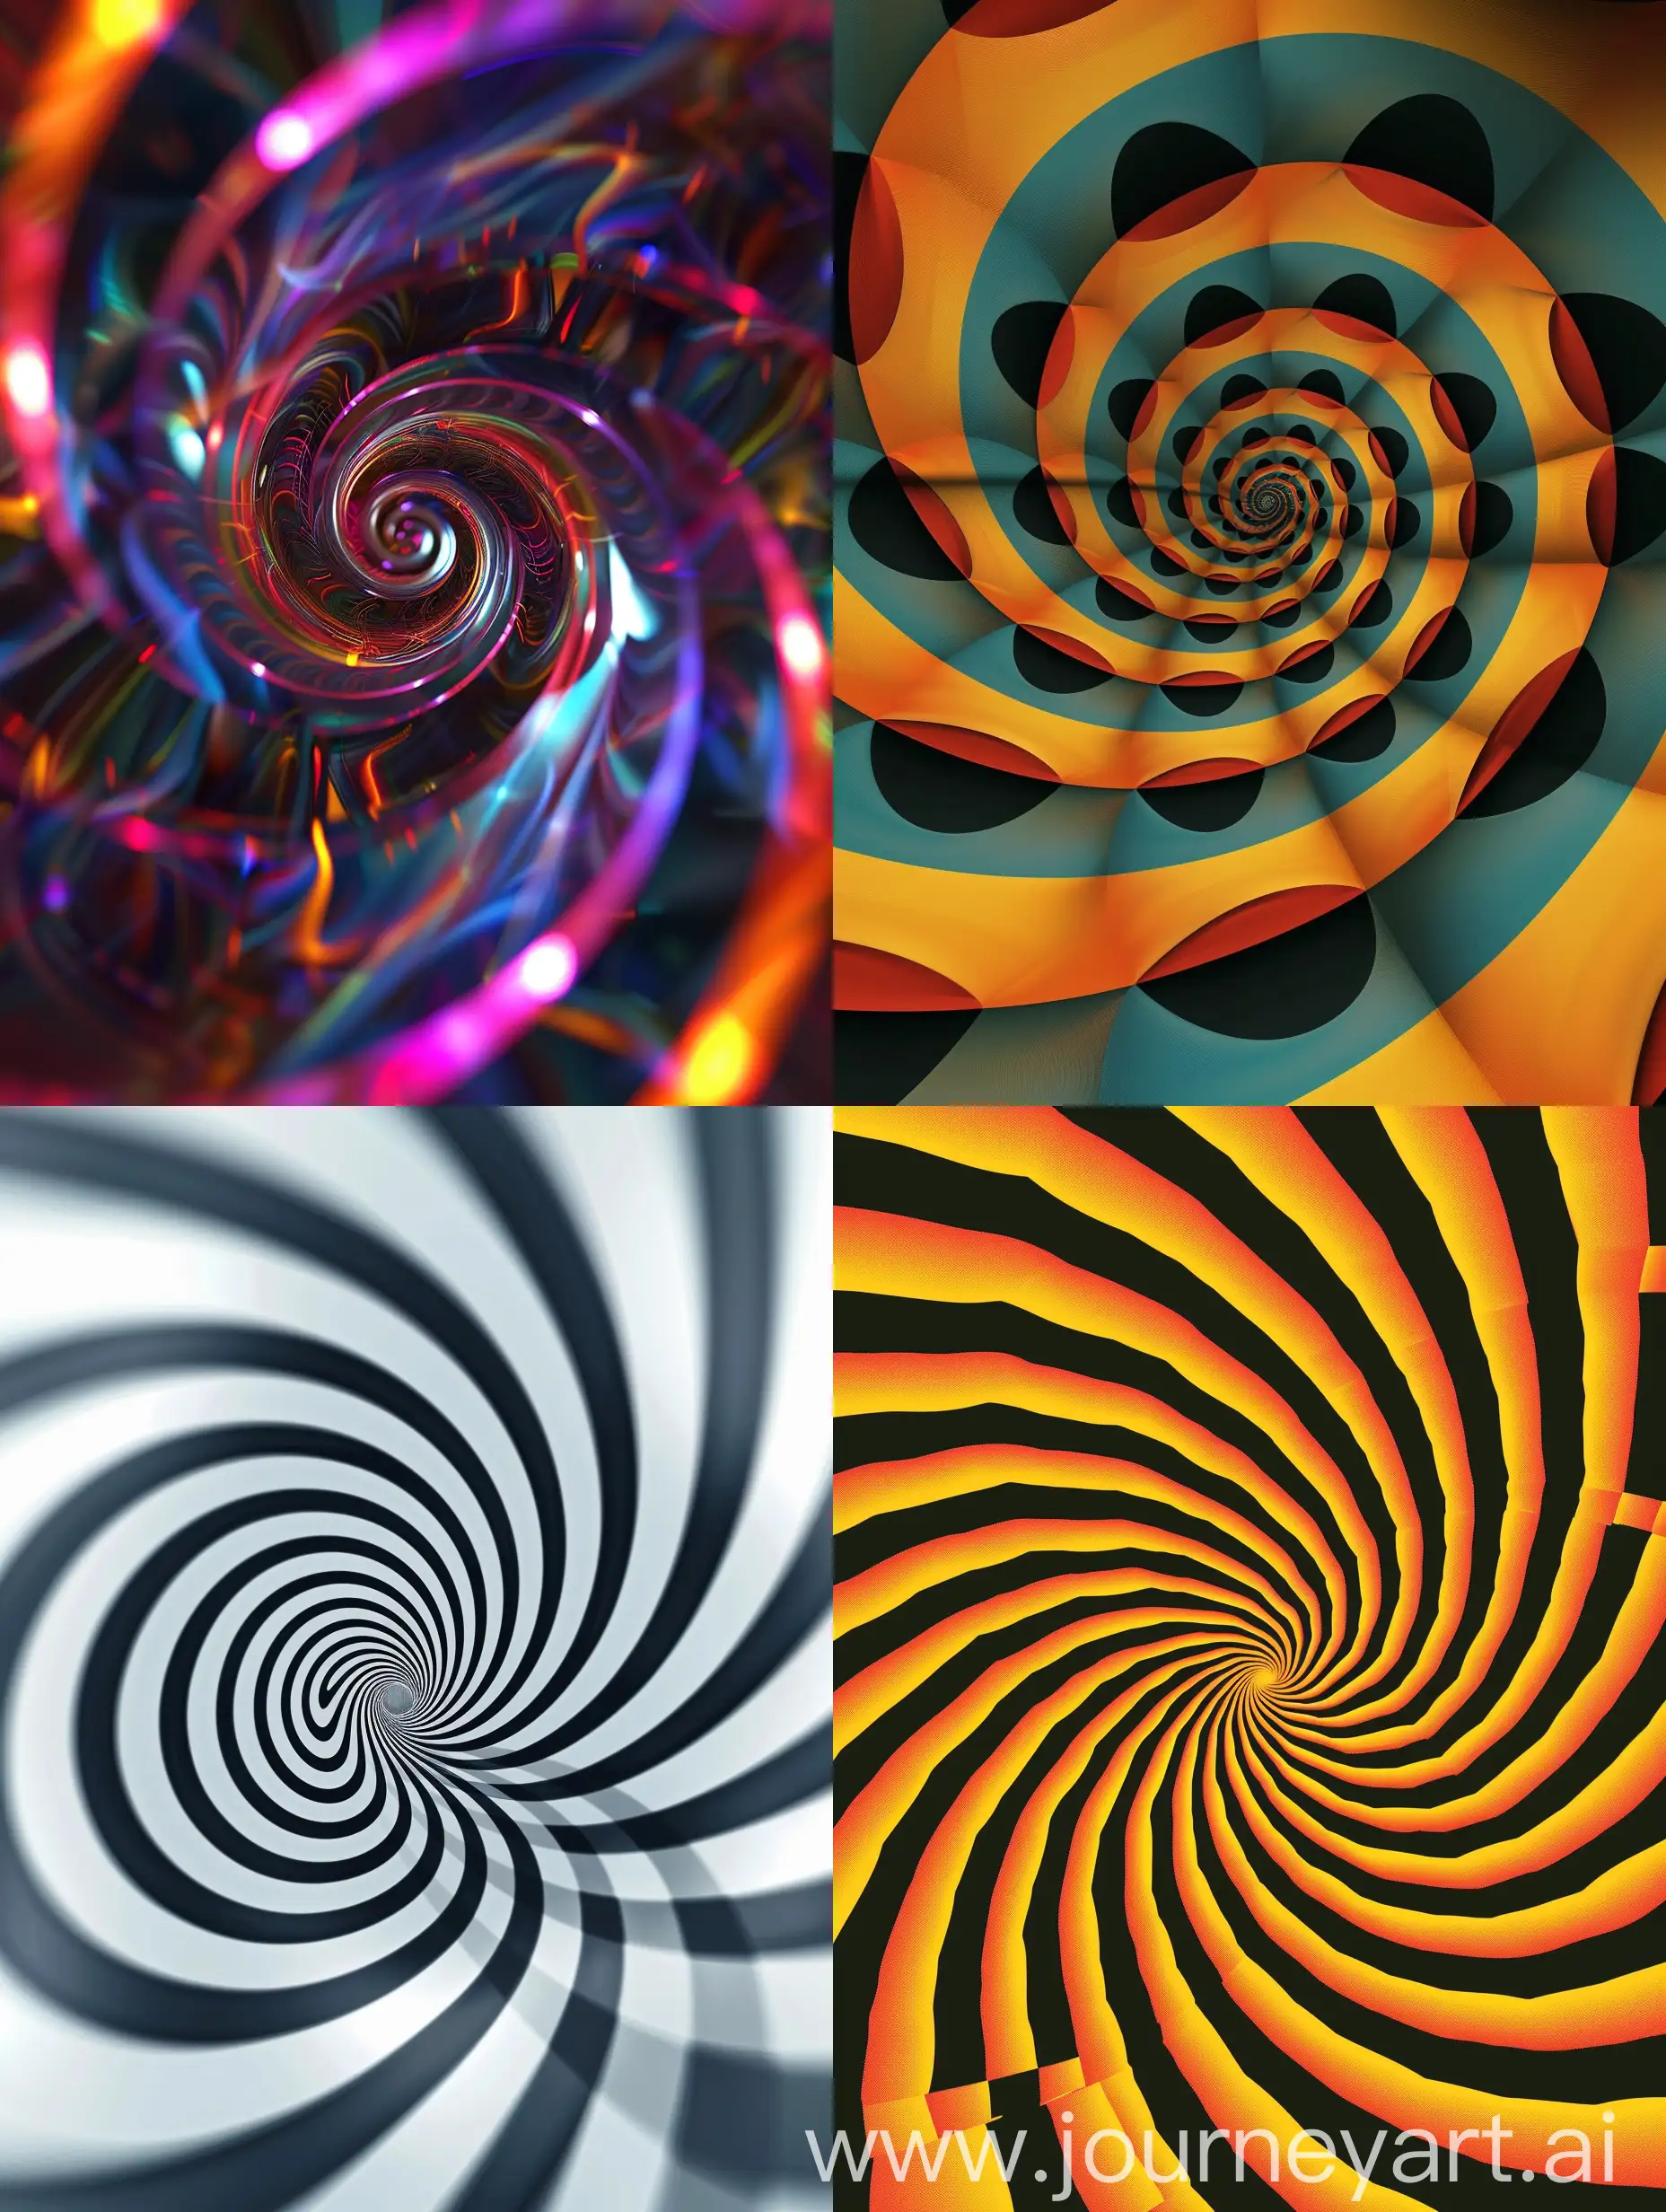 gambar spiral hipnotis yang dapat memicu trance dan sugesti diri yang kuat. Saat saya menatap gambar itu, saya mungkin merasa lebih terfokus pada sugesti yang ingin saya tanamkan pada diri sendiri.